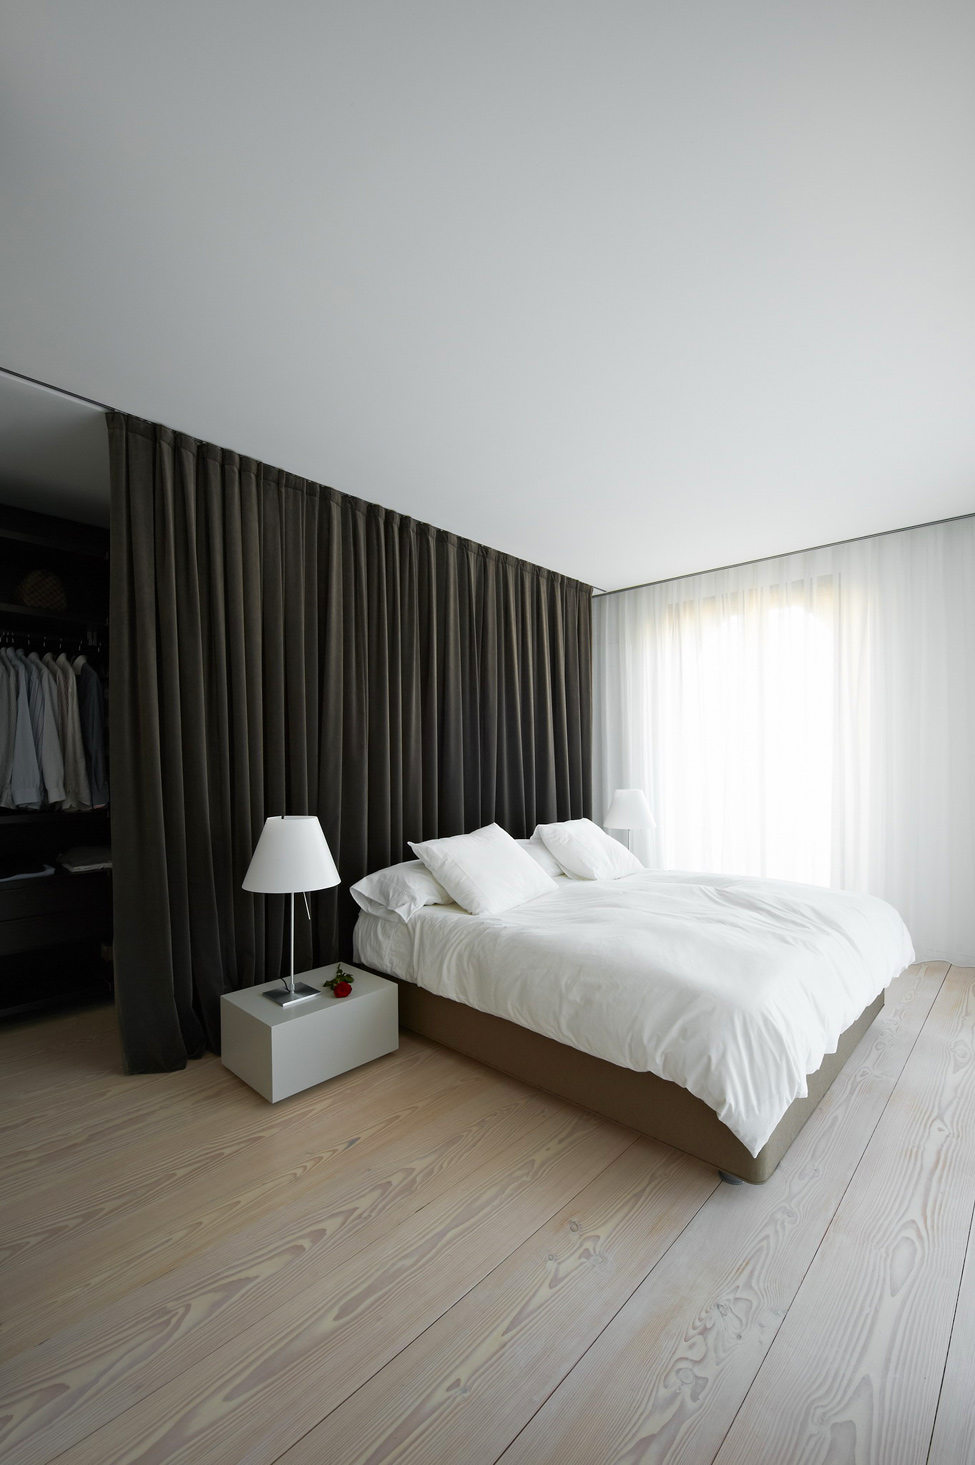 The bedroom interior design